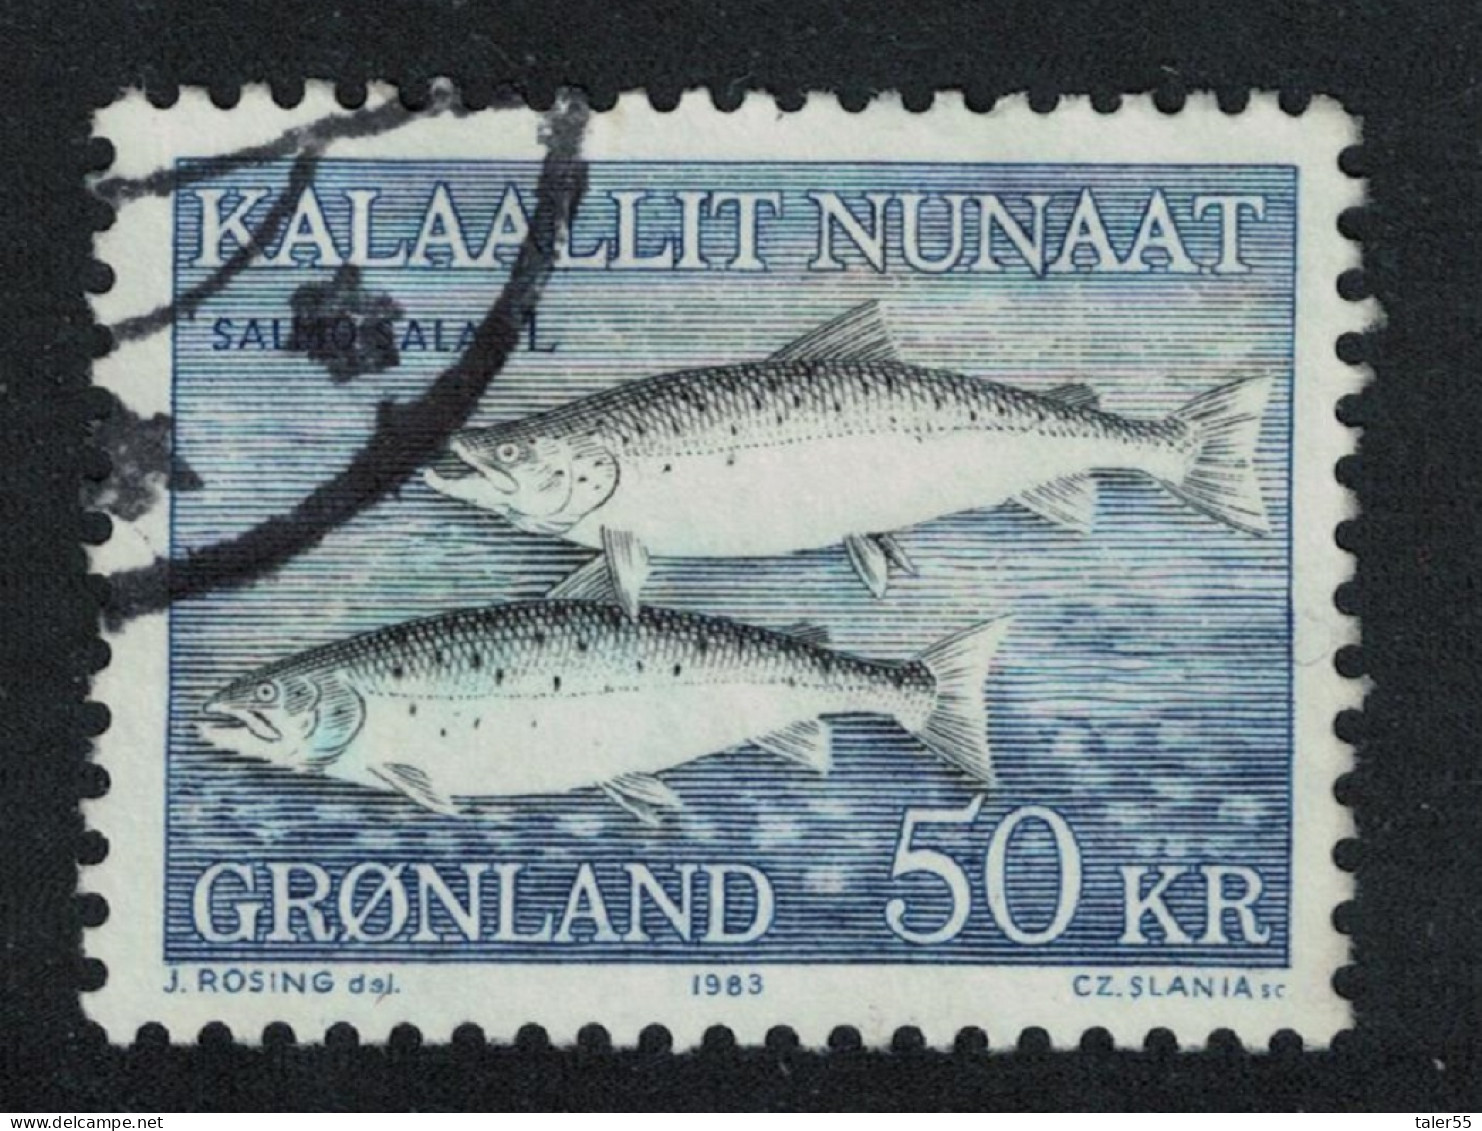 Greenland Atlantic Salmon 50Kr 1983 Canc SG#138 MI#140 Sc#141 - Used Stamps